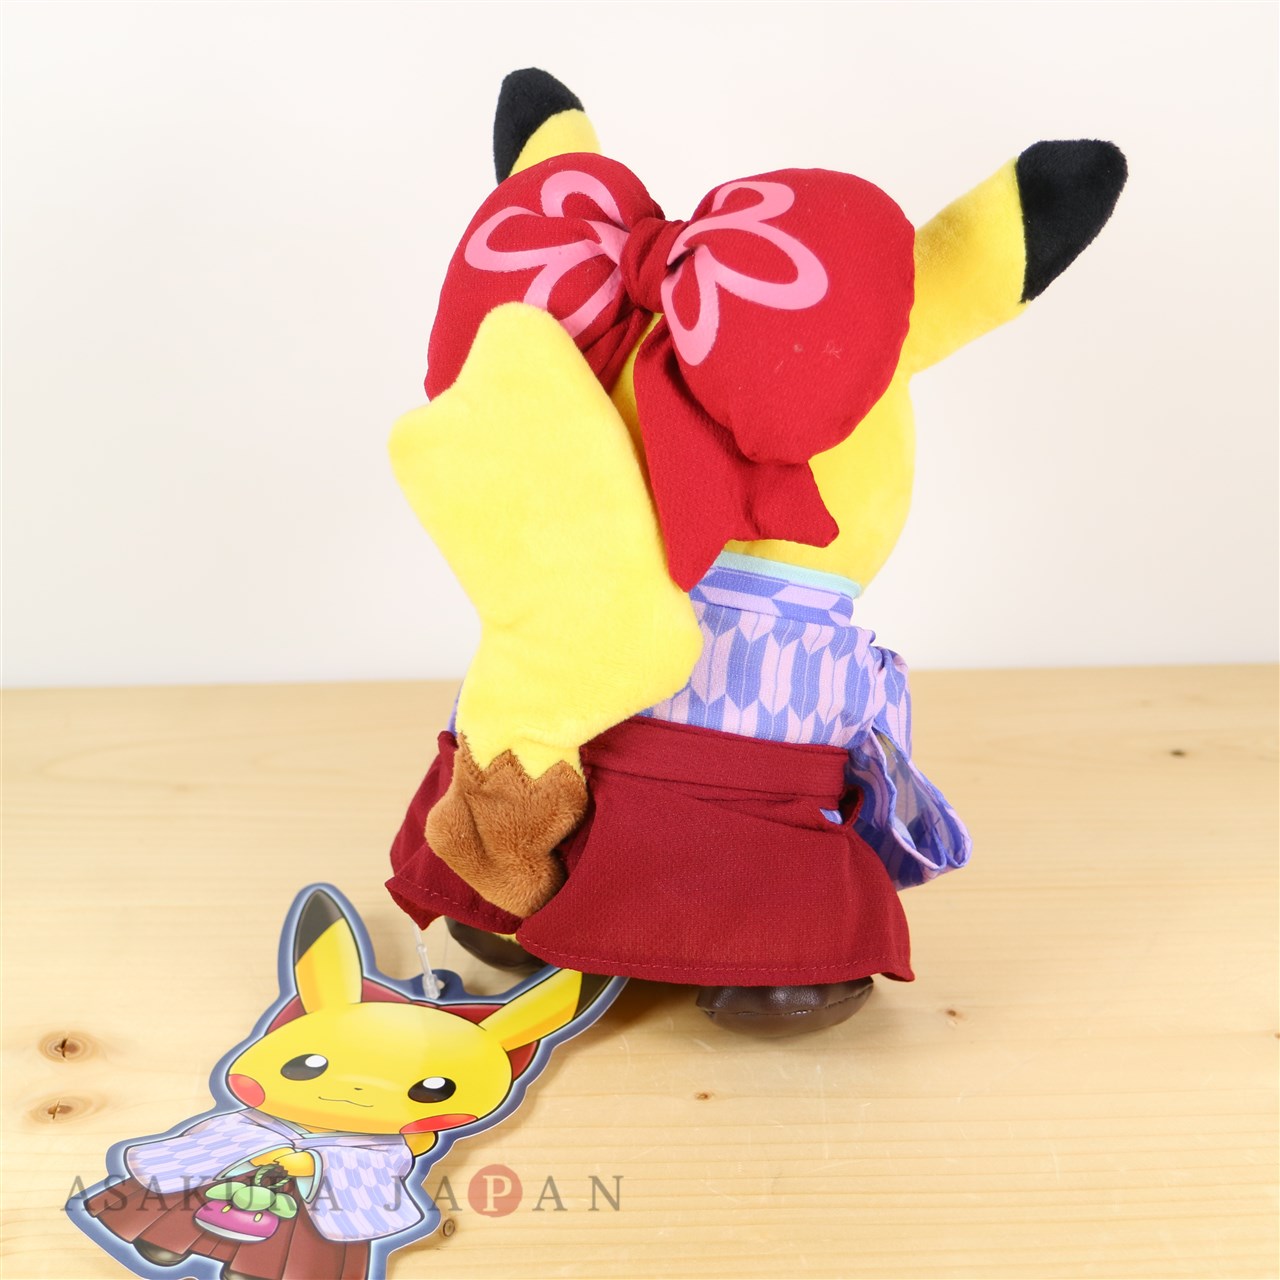 Details about   Pokemon Center Japan Original Tokyo DX Kimono Hakama Pikachu Plush doll 